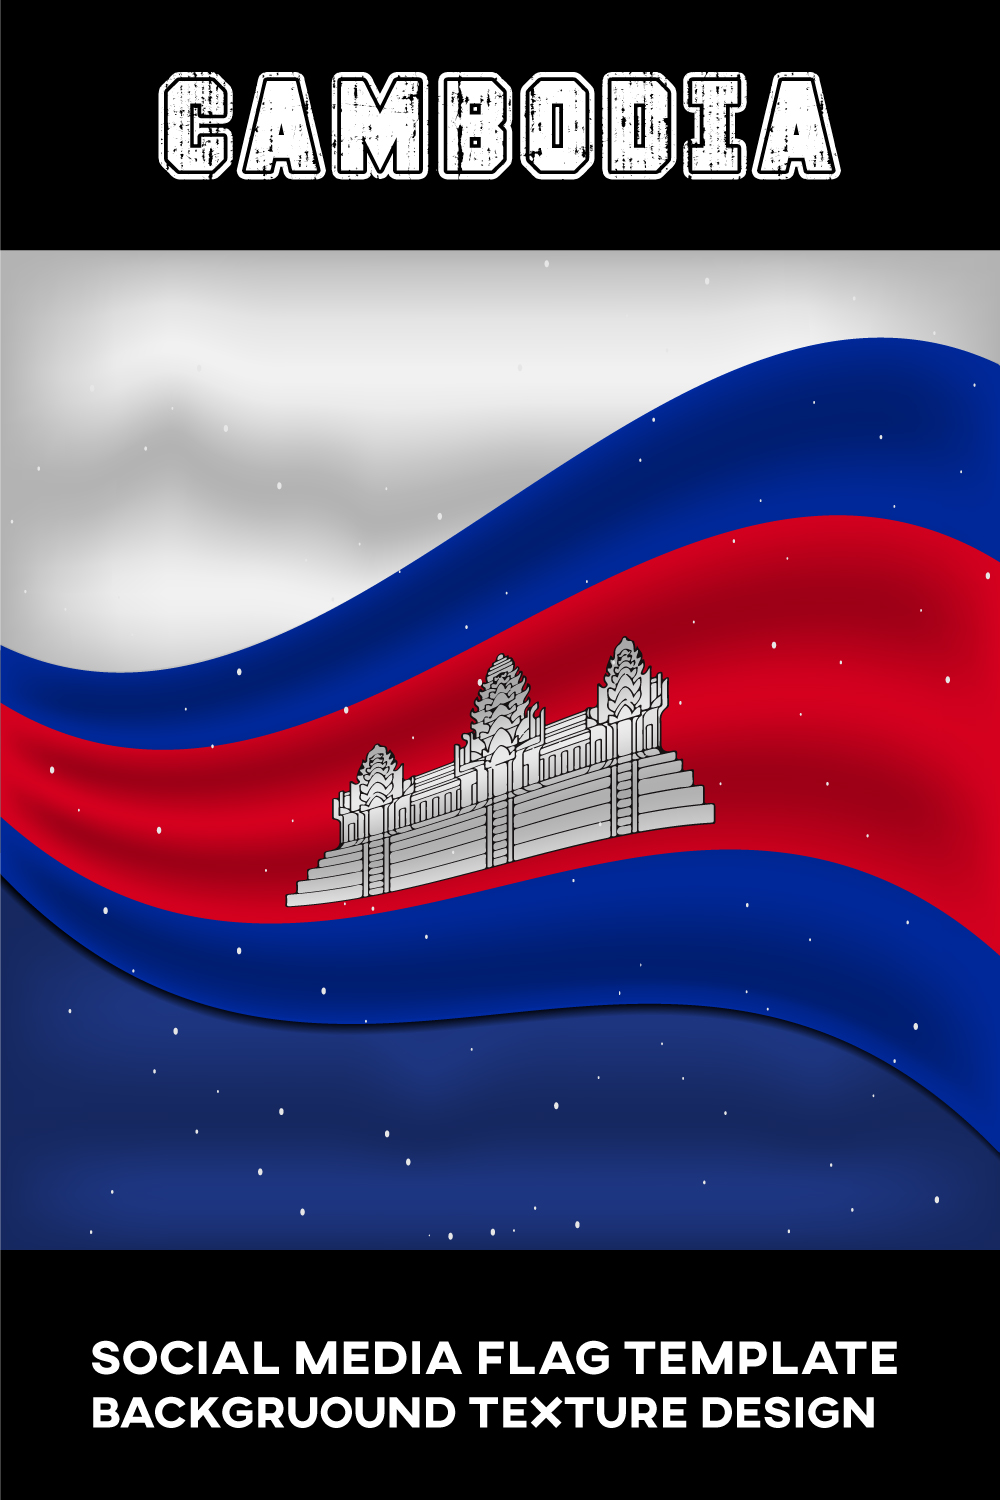 Colorful image of Cambodia flag.